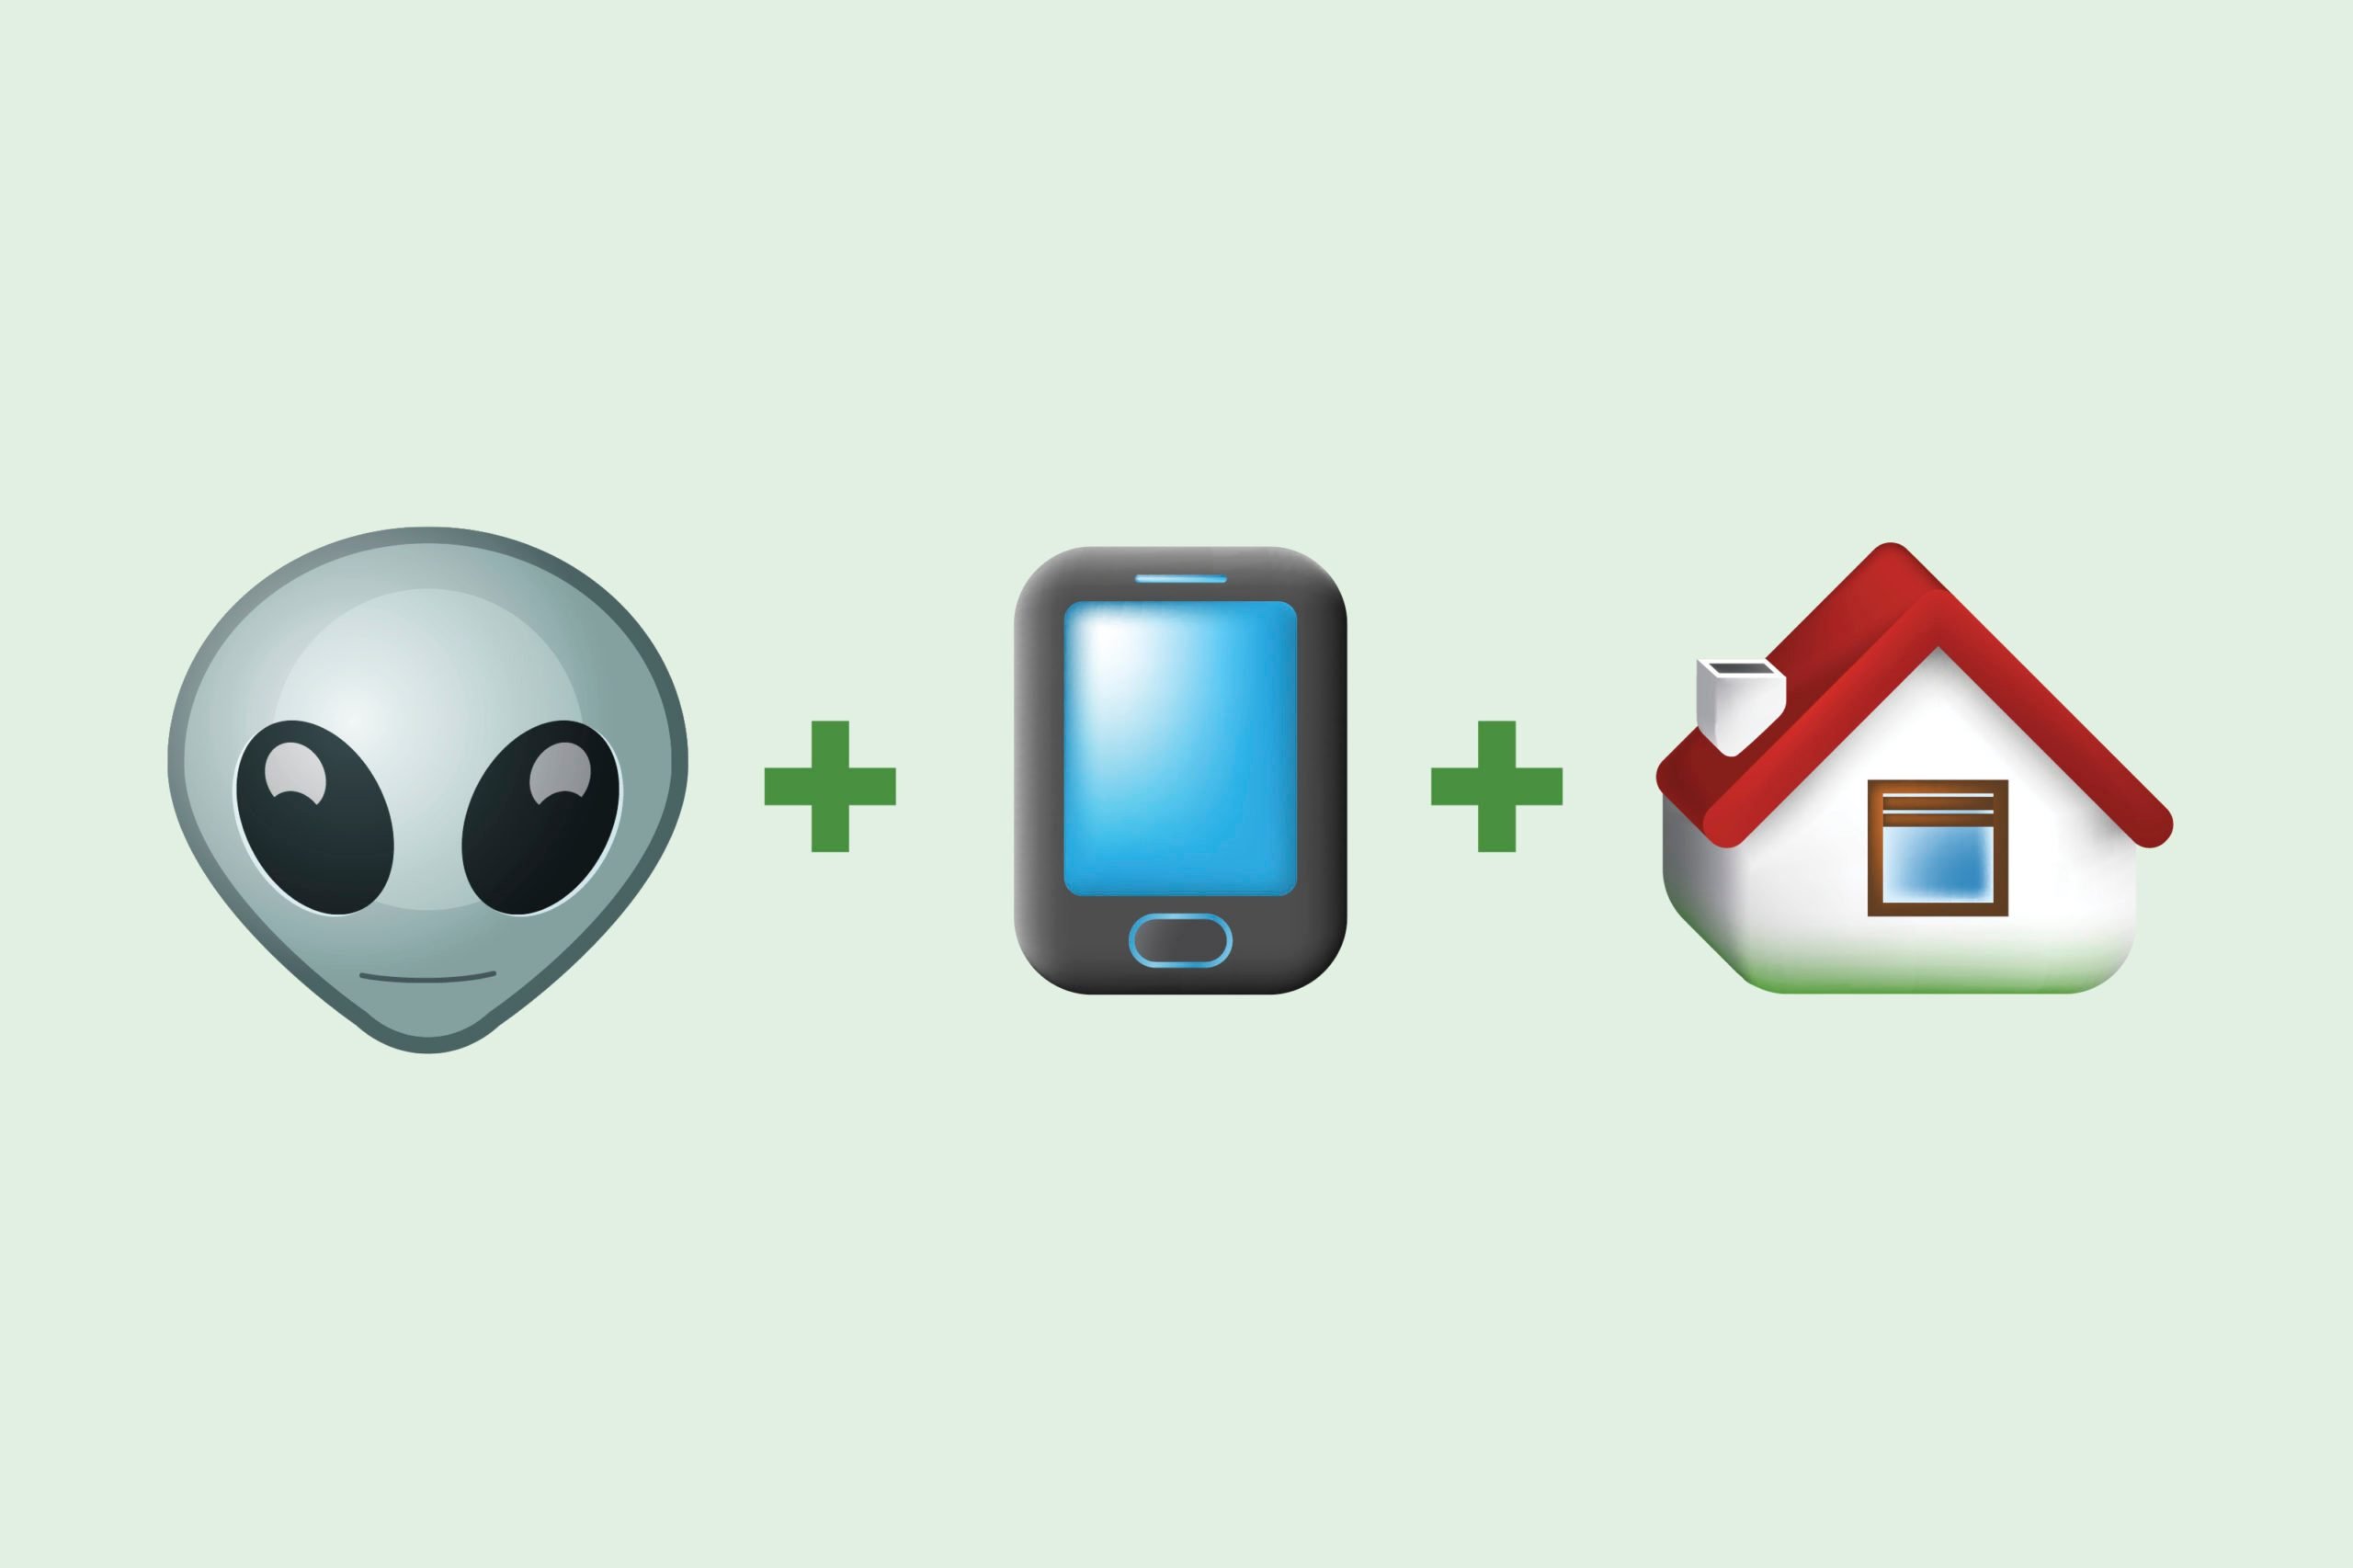 Alien emoji + phone emoji + house emoji